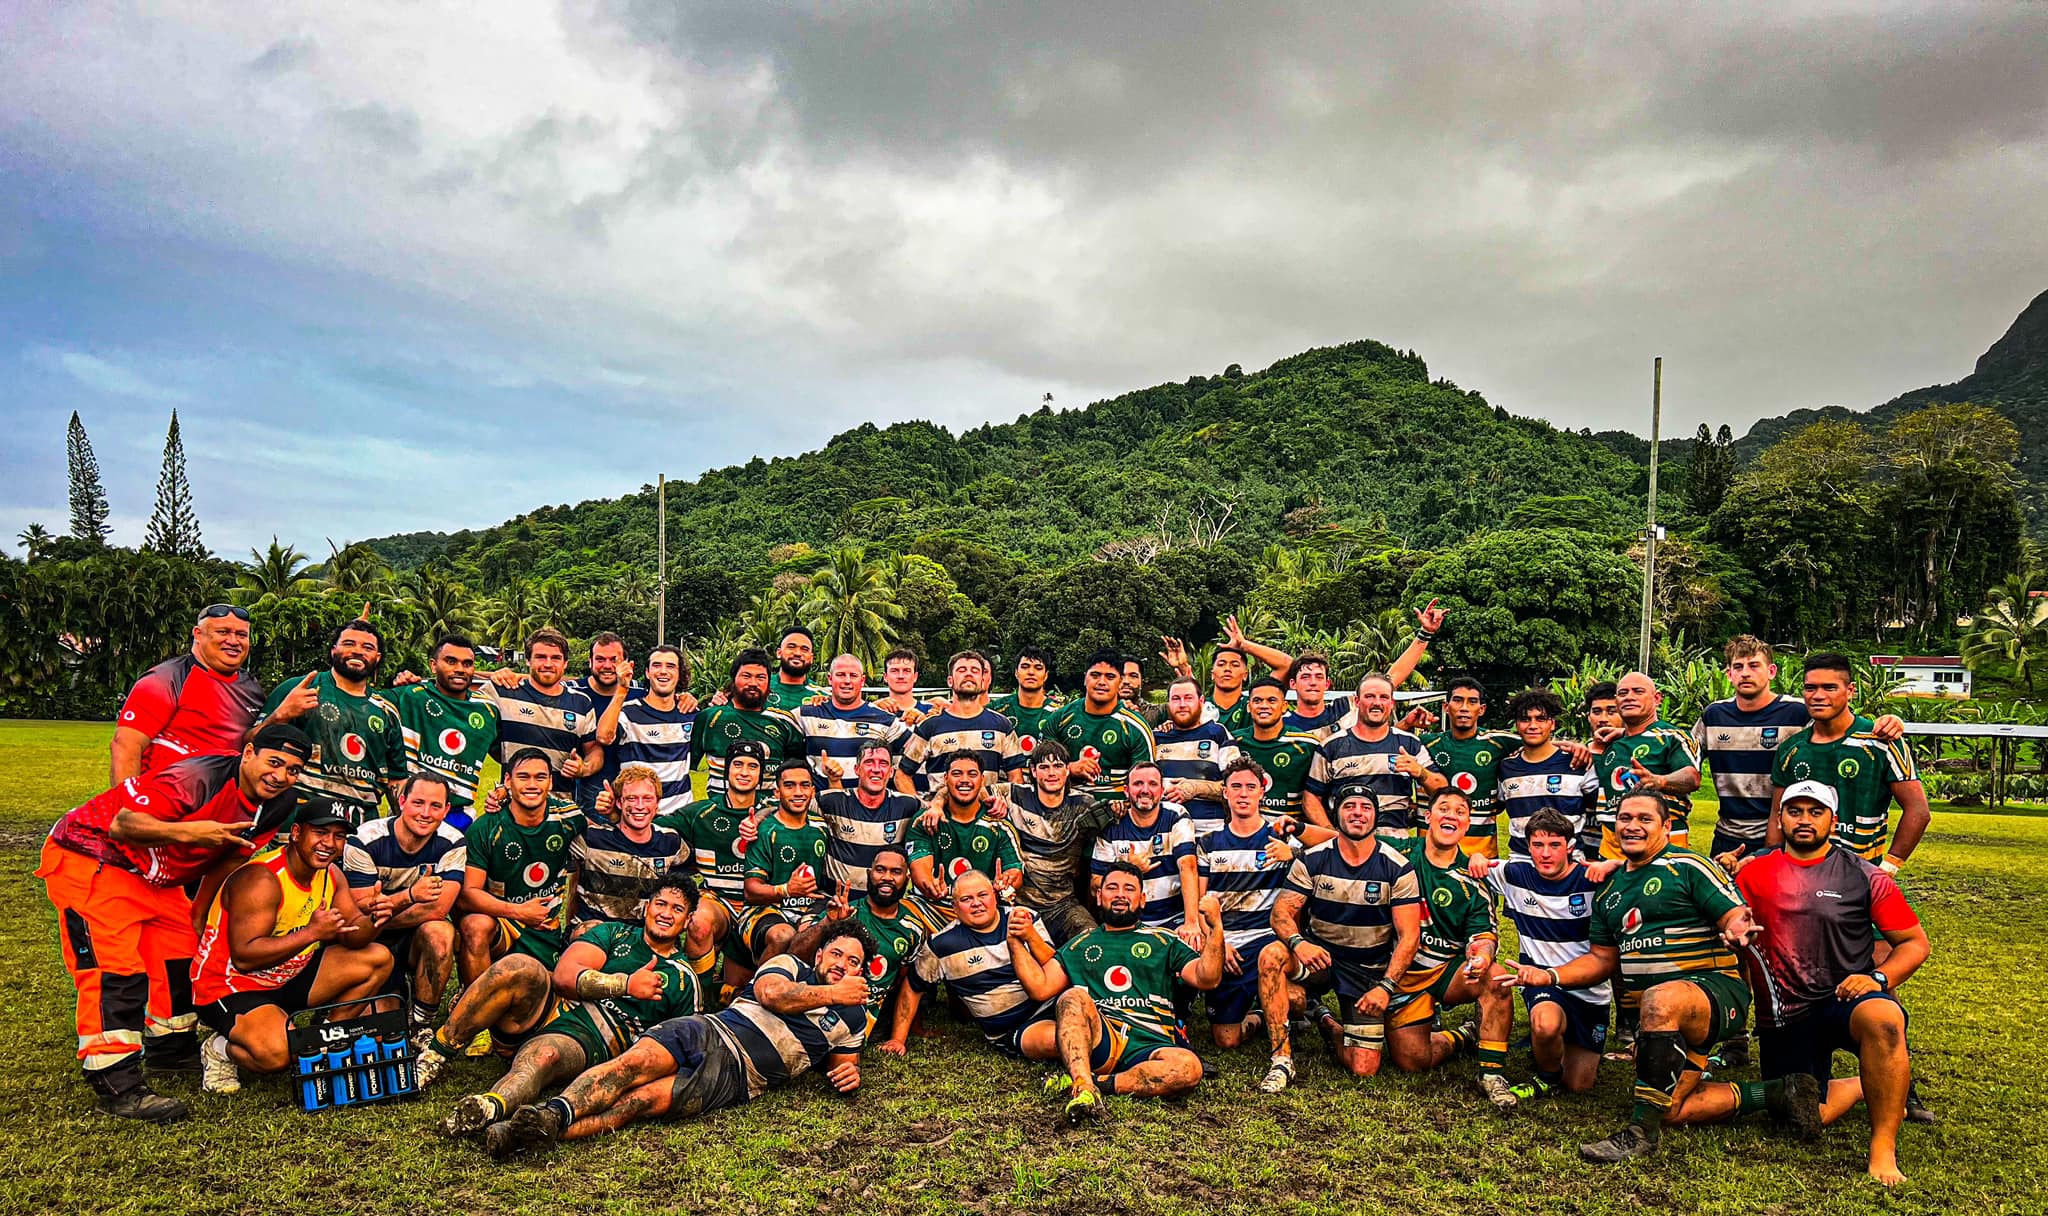 Kiwi senior rugby team thanks Rarotonga Rugby Union